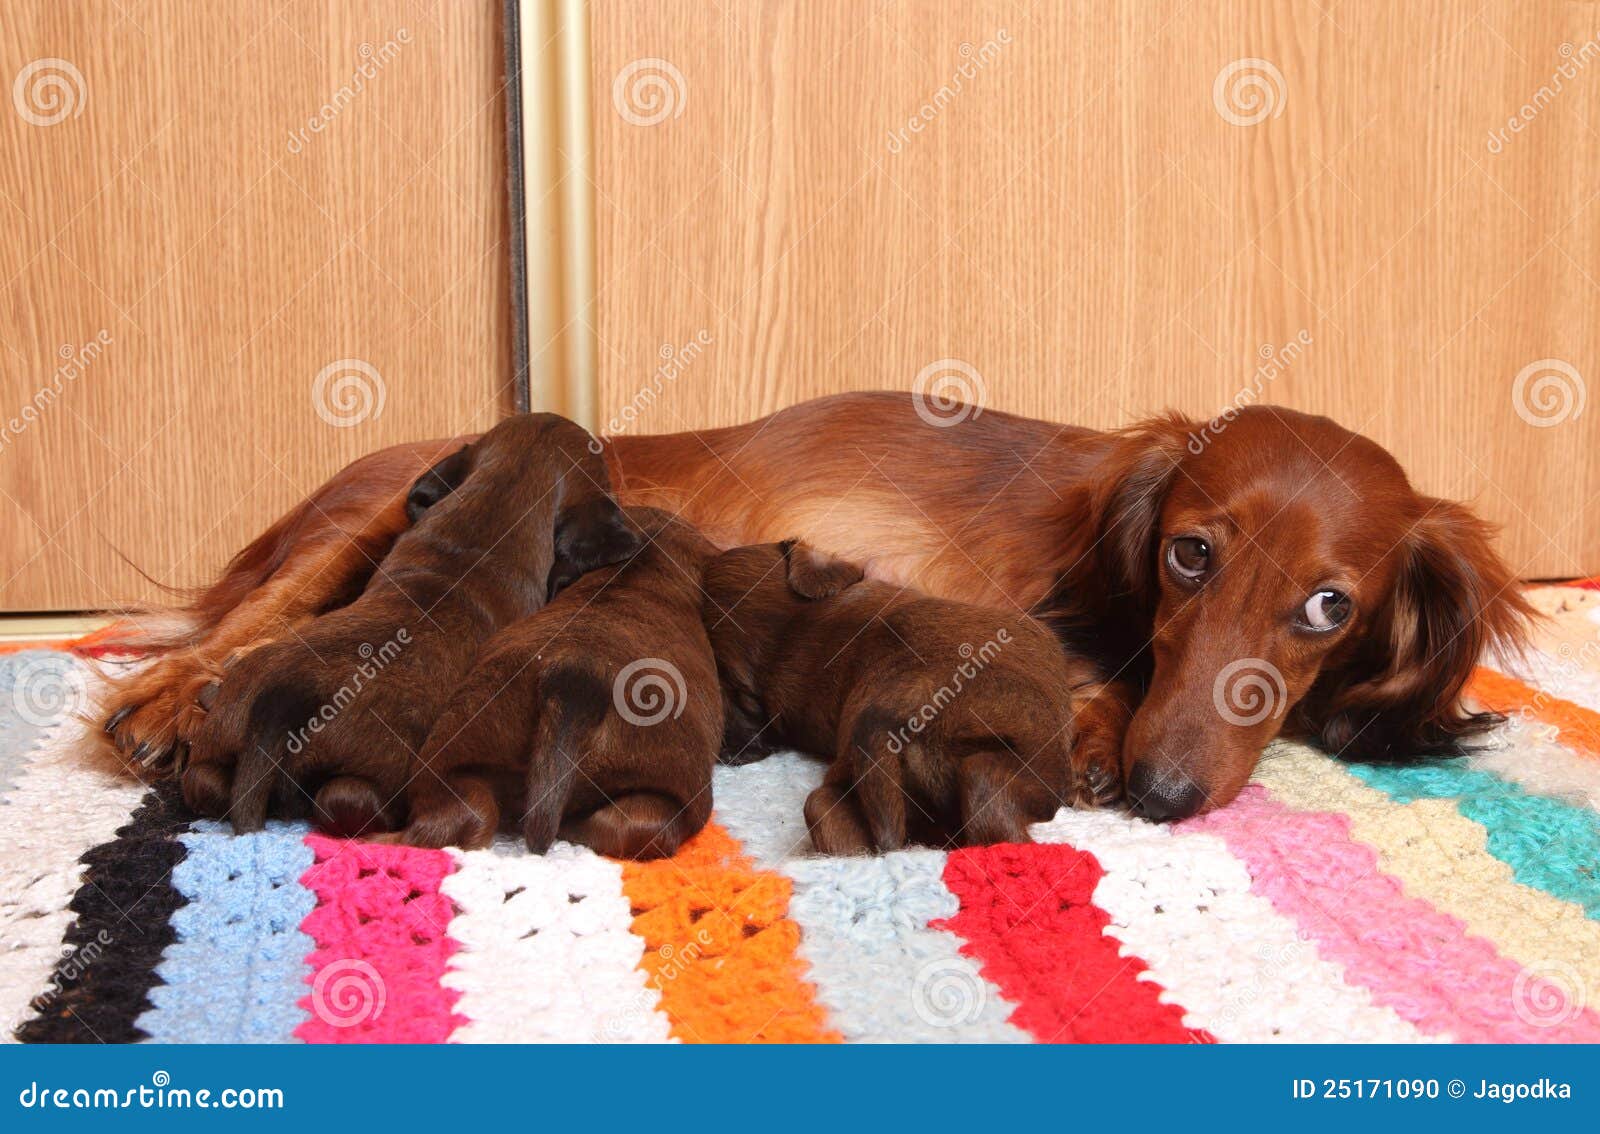 Dachshund feeding puppies stock photo. Image of whelp